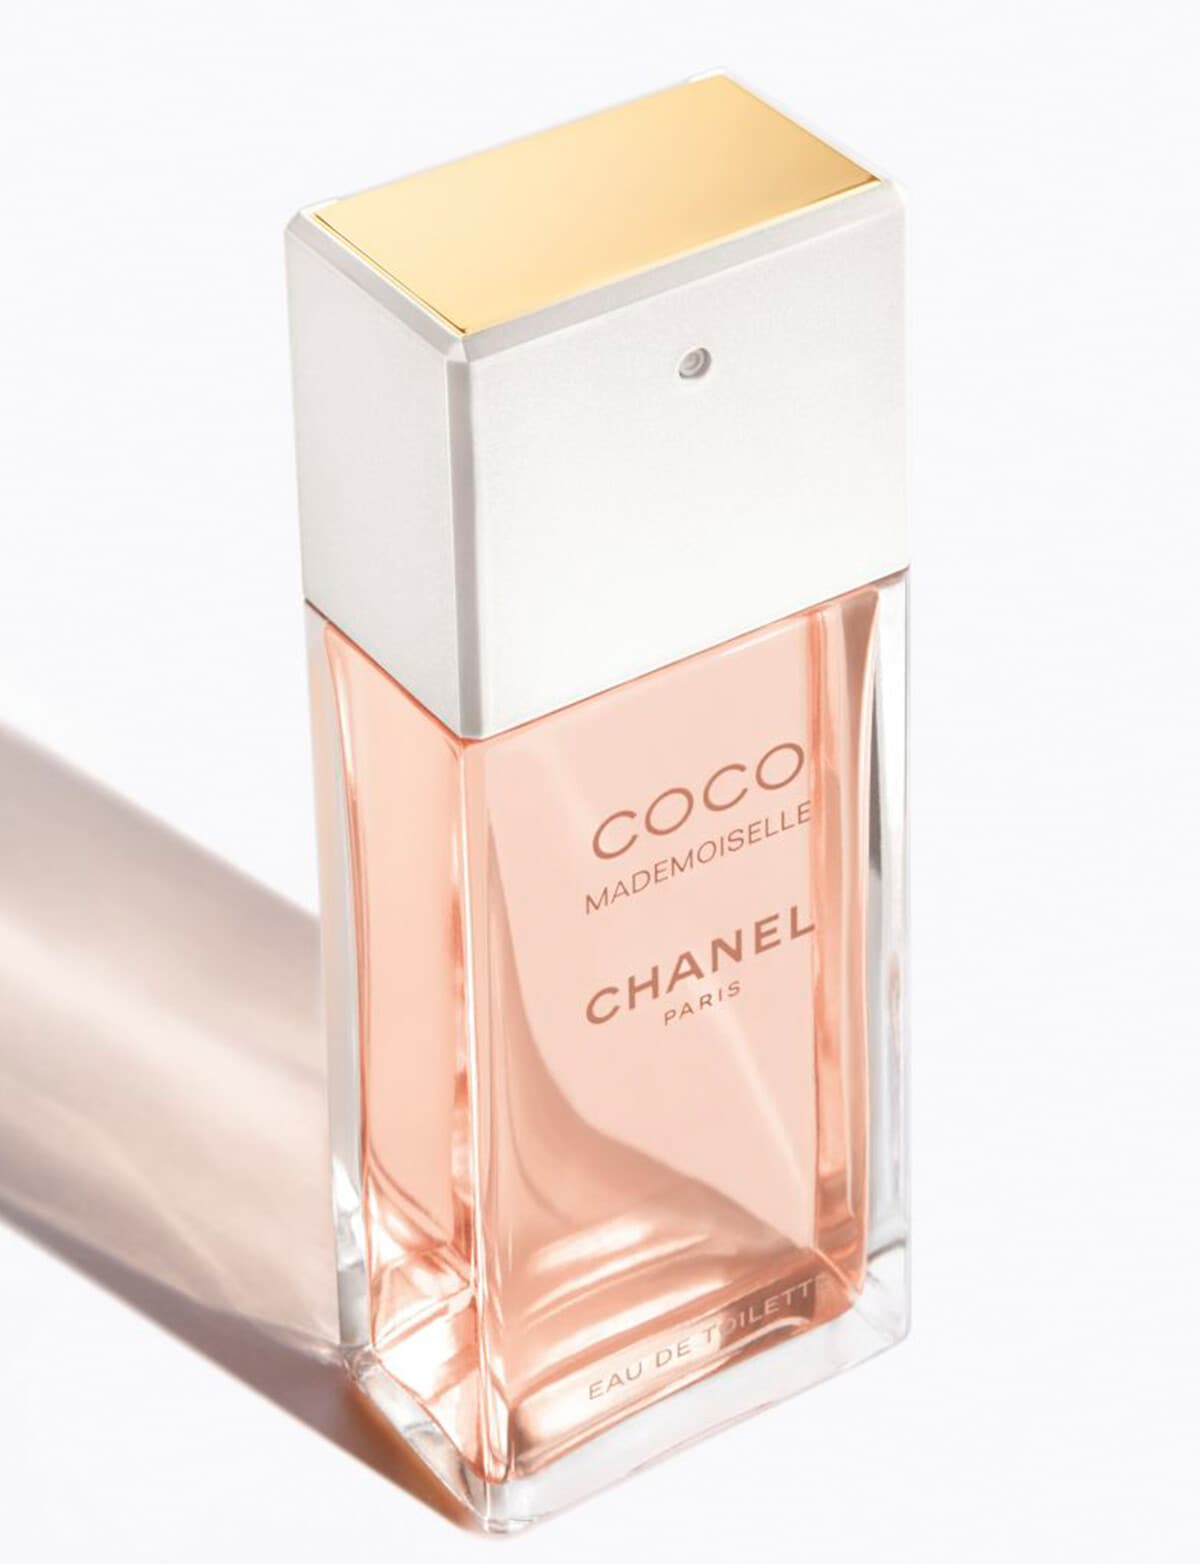 Chanel Coco Mademoiselle Eau De Parfum Sample Perfume Vial - International  Makeup